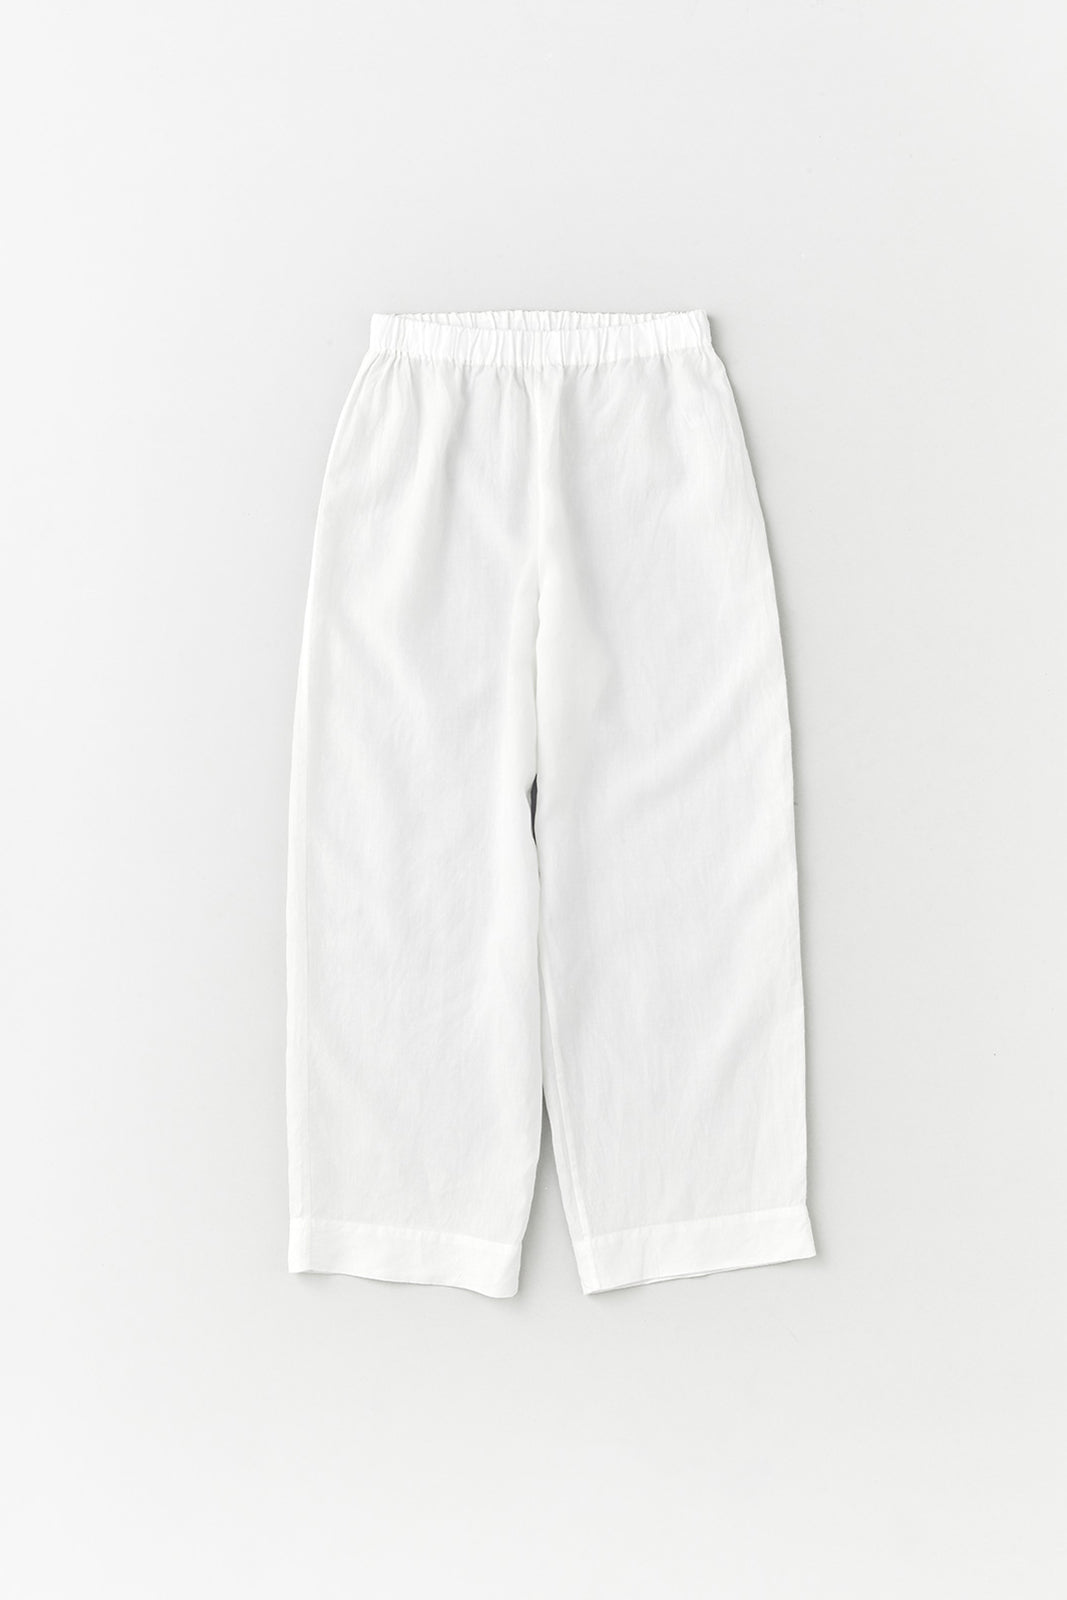 Arts & Science | White Simple Pajama Pants | A'maree's – A'MAREE'S